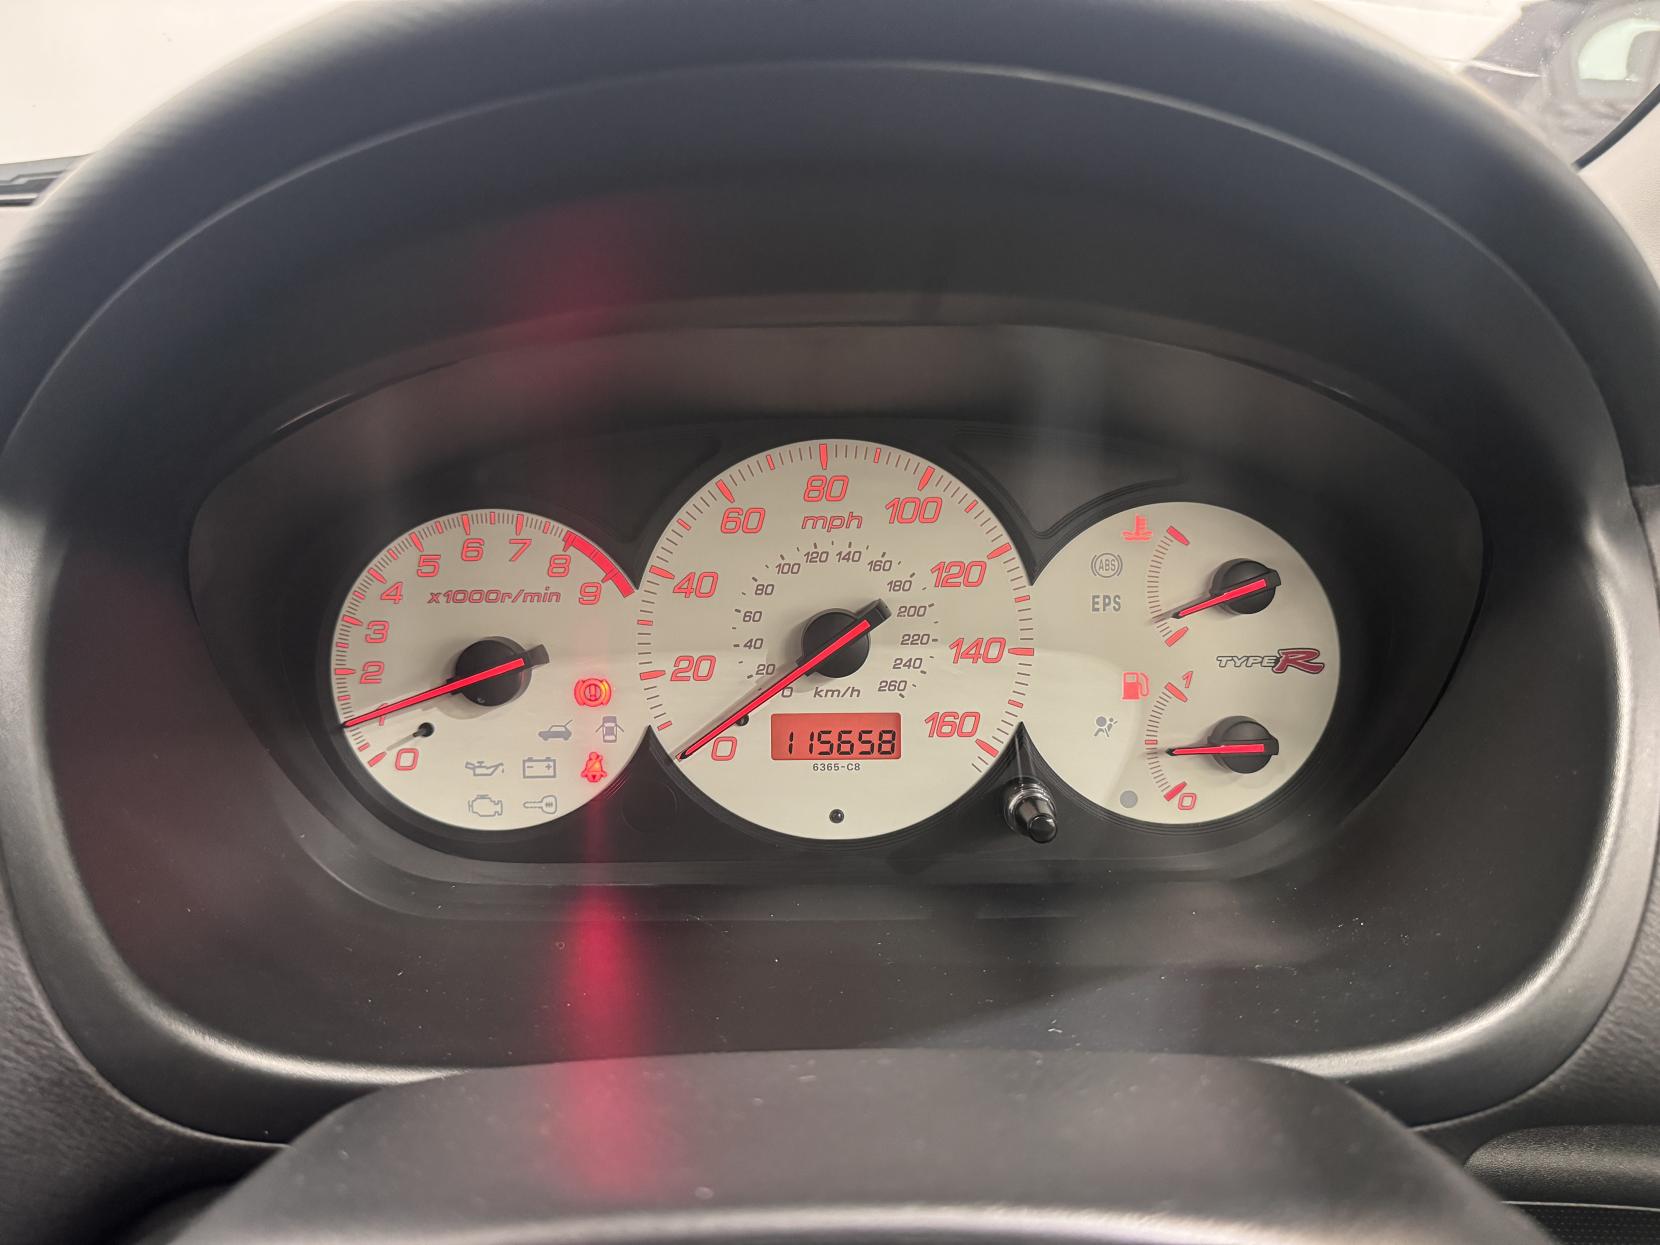 Honda Civic 2.0 i-VTEC Type R Hatchback 3dr Petrol Manual (212 g/km, 197 bhp)